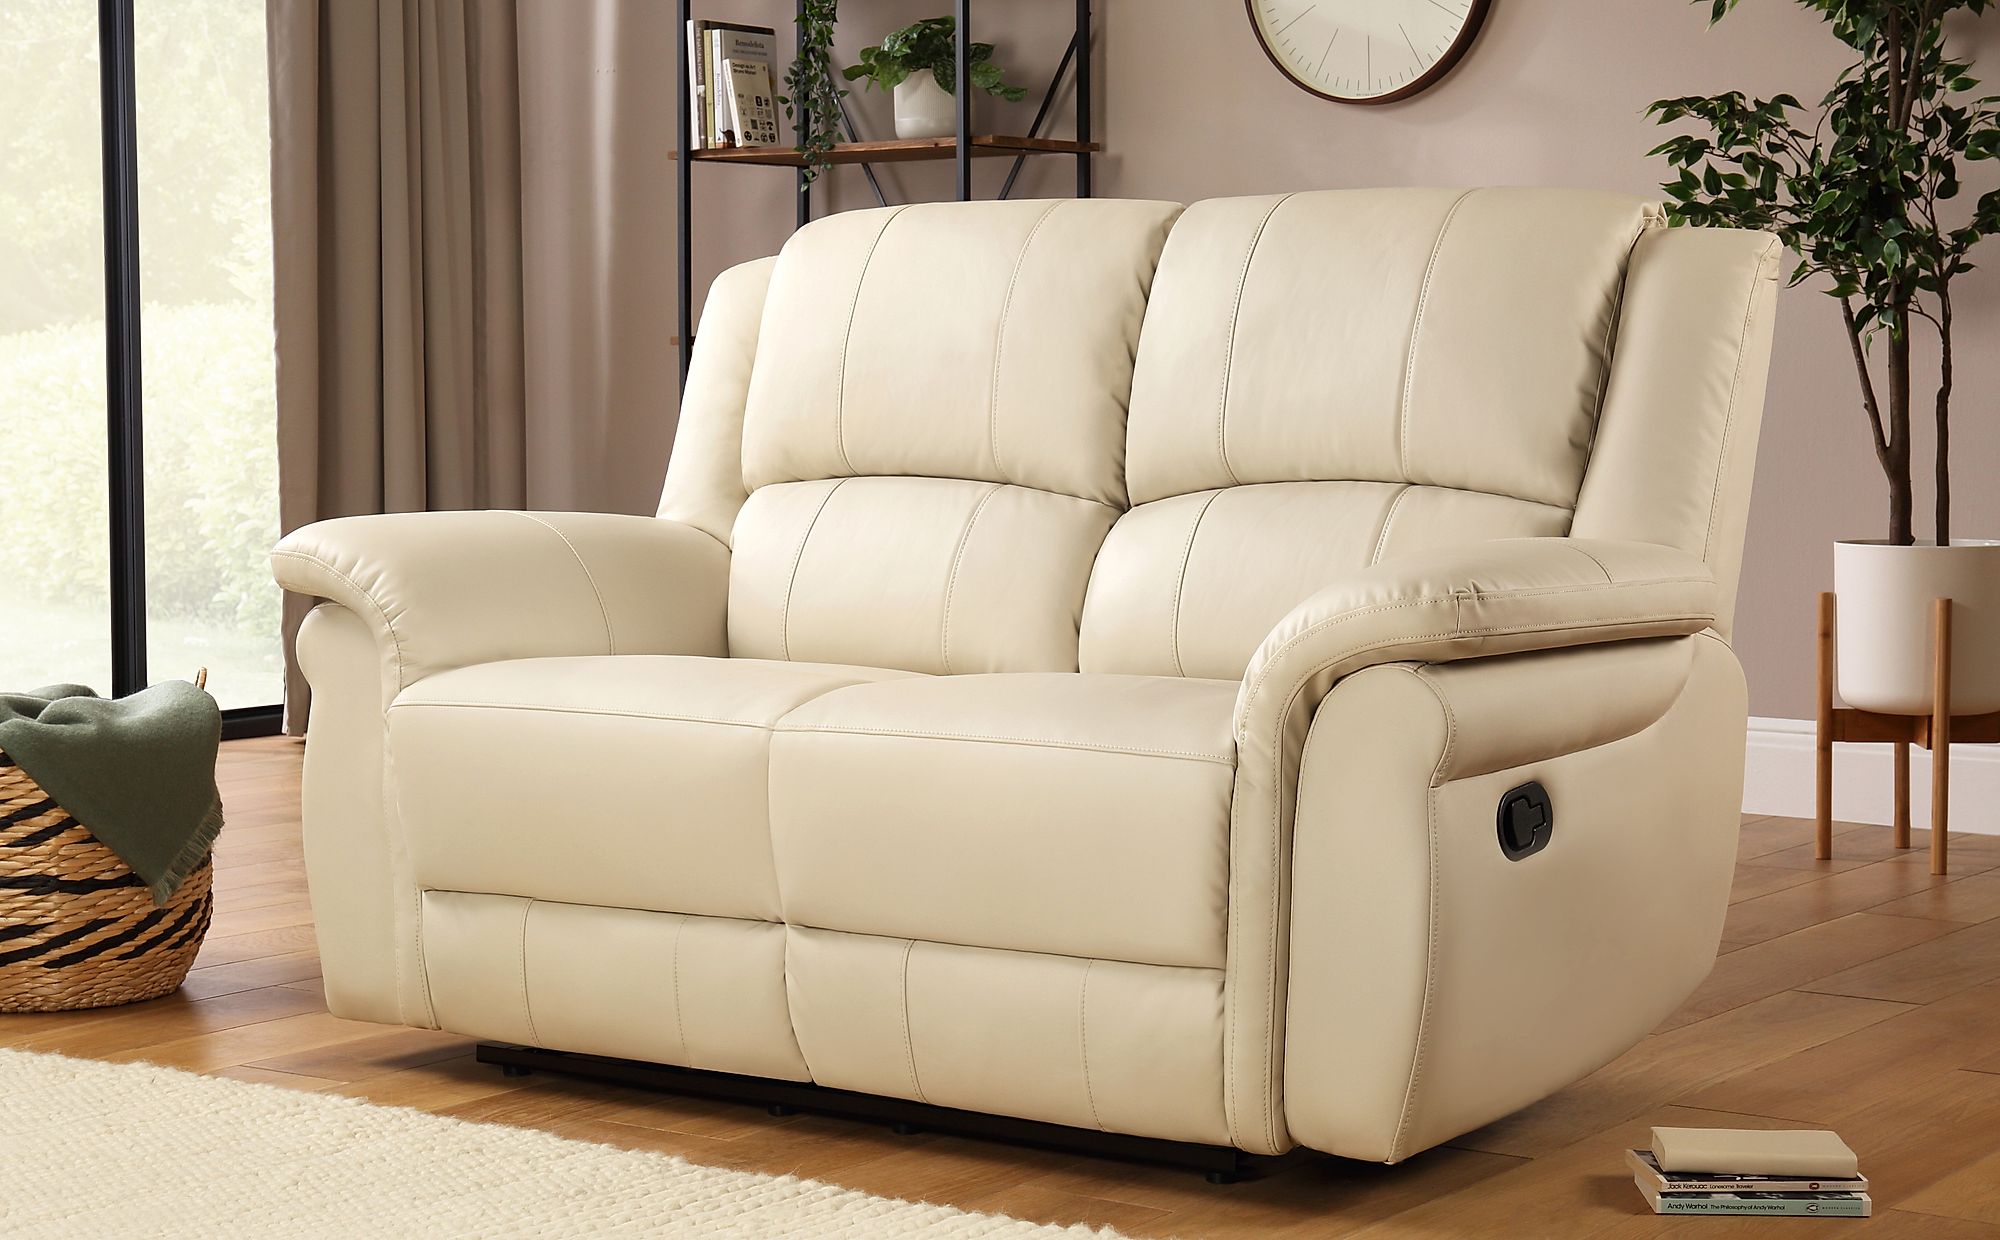 2-seat reclining sofa leather